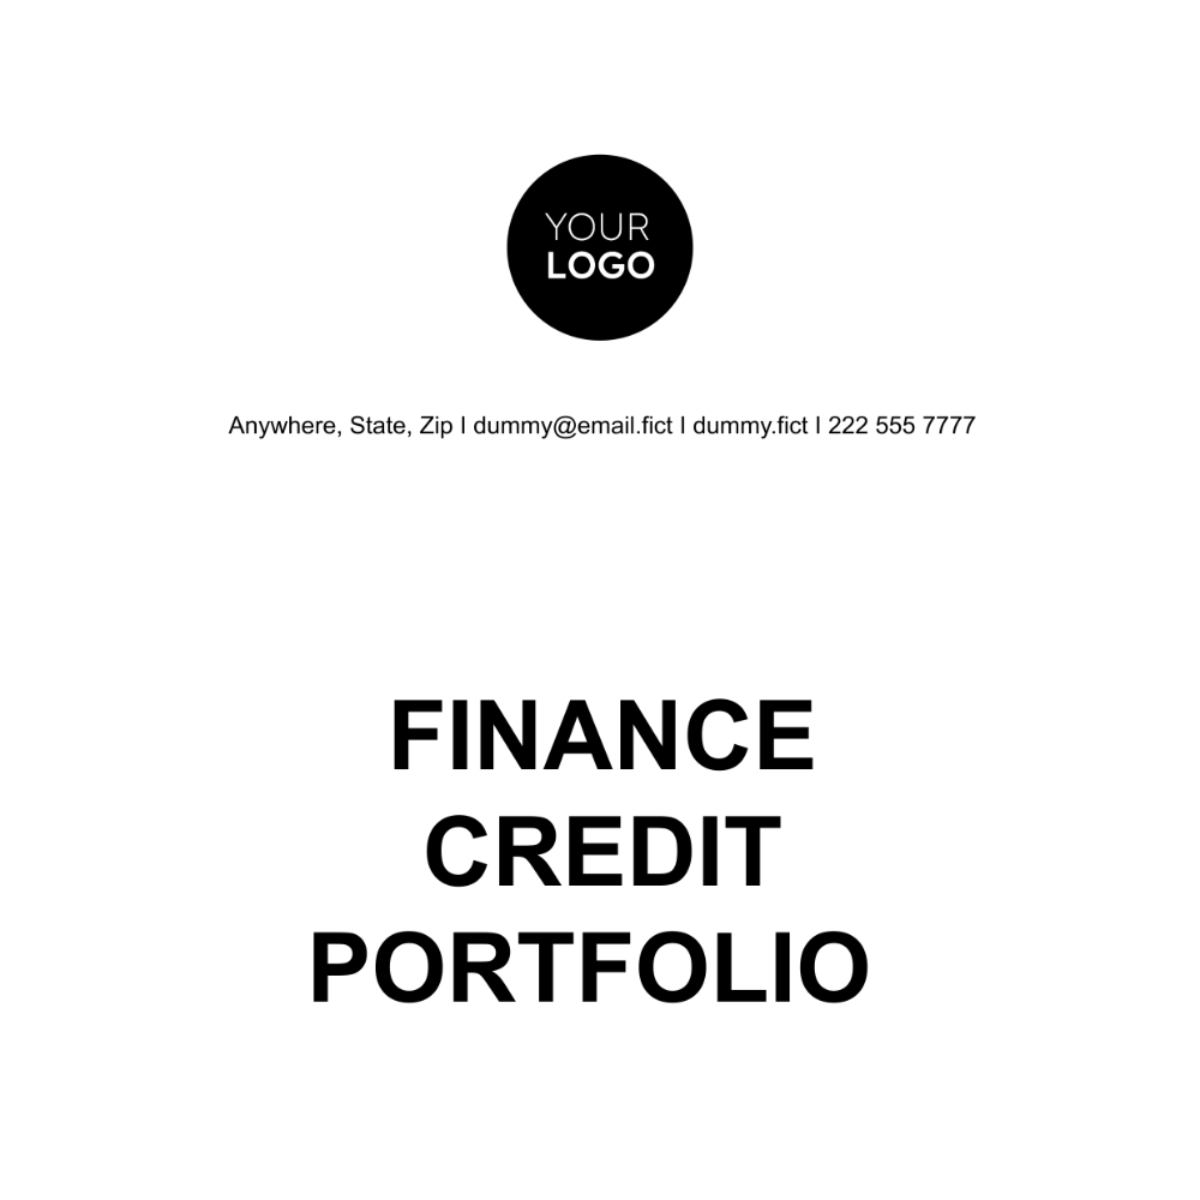 Finance Credit Portfolio Template